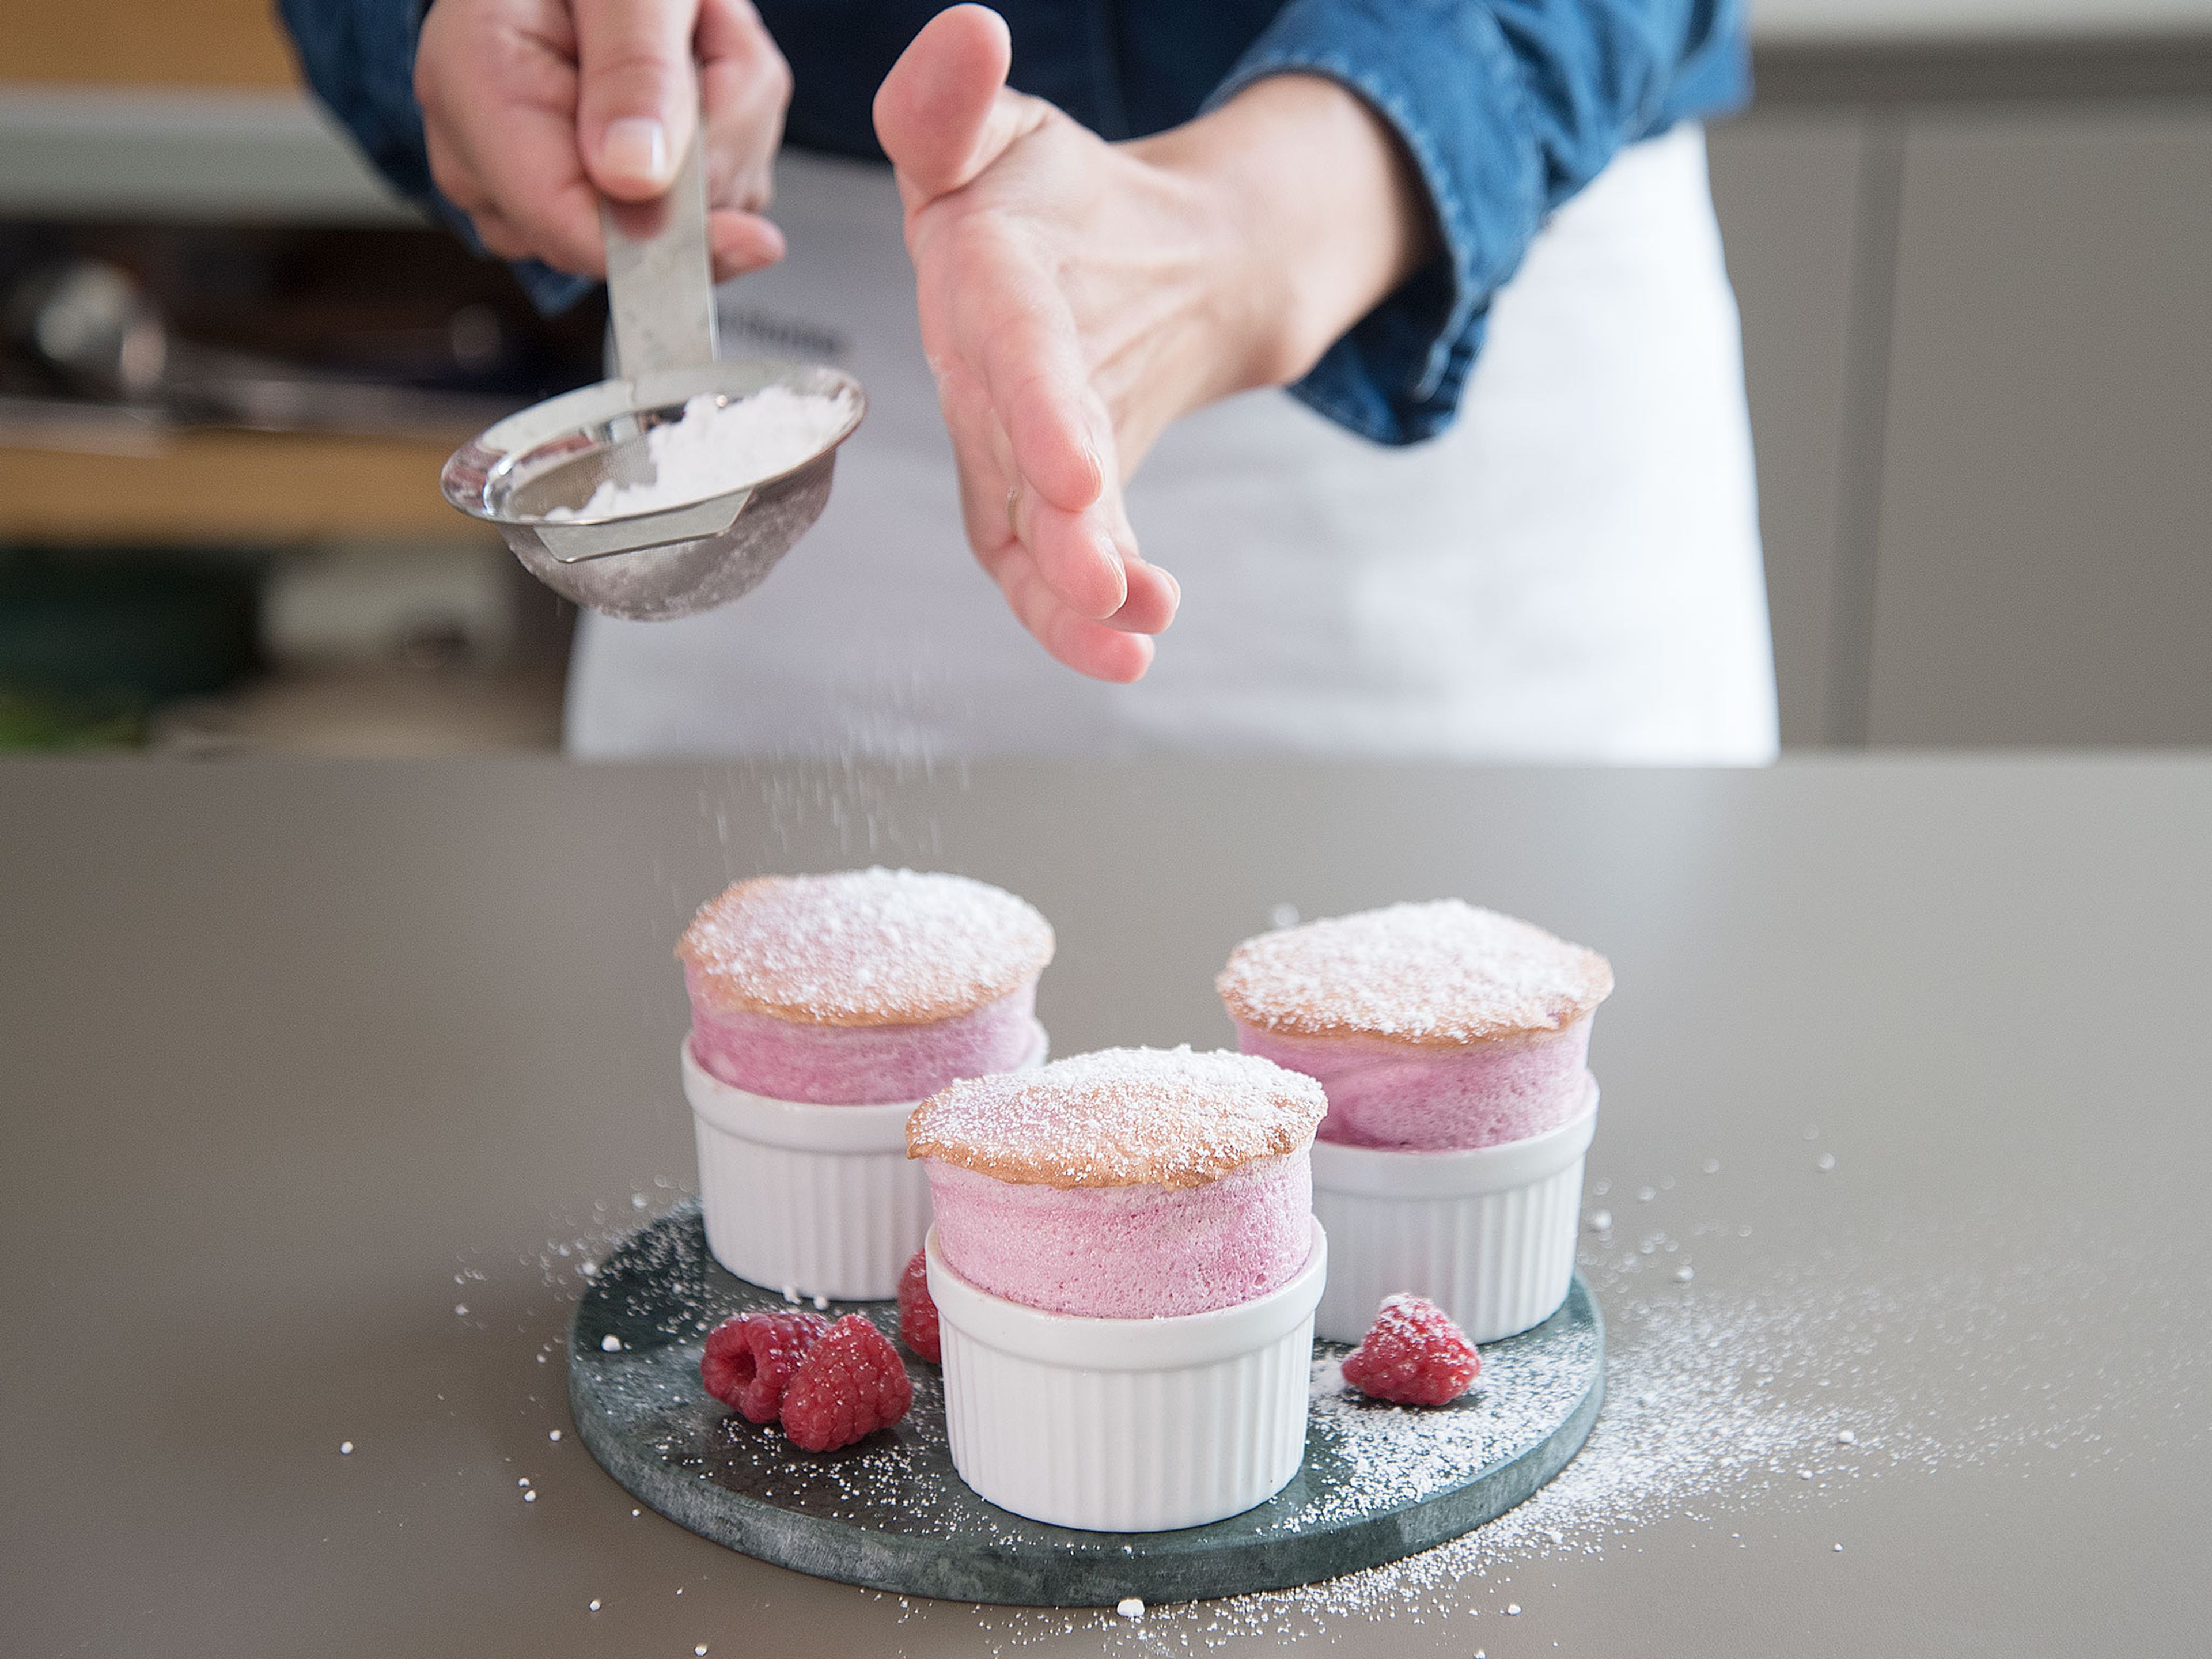 Serve the soufflés warm with powdered sugar and fresh raspberries. Enjoy!